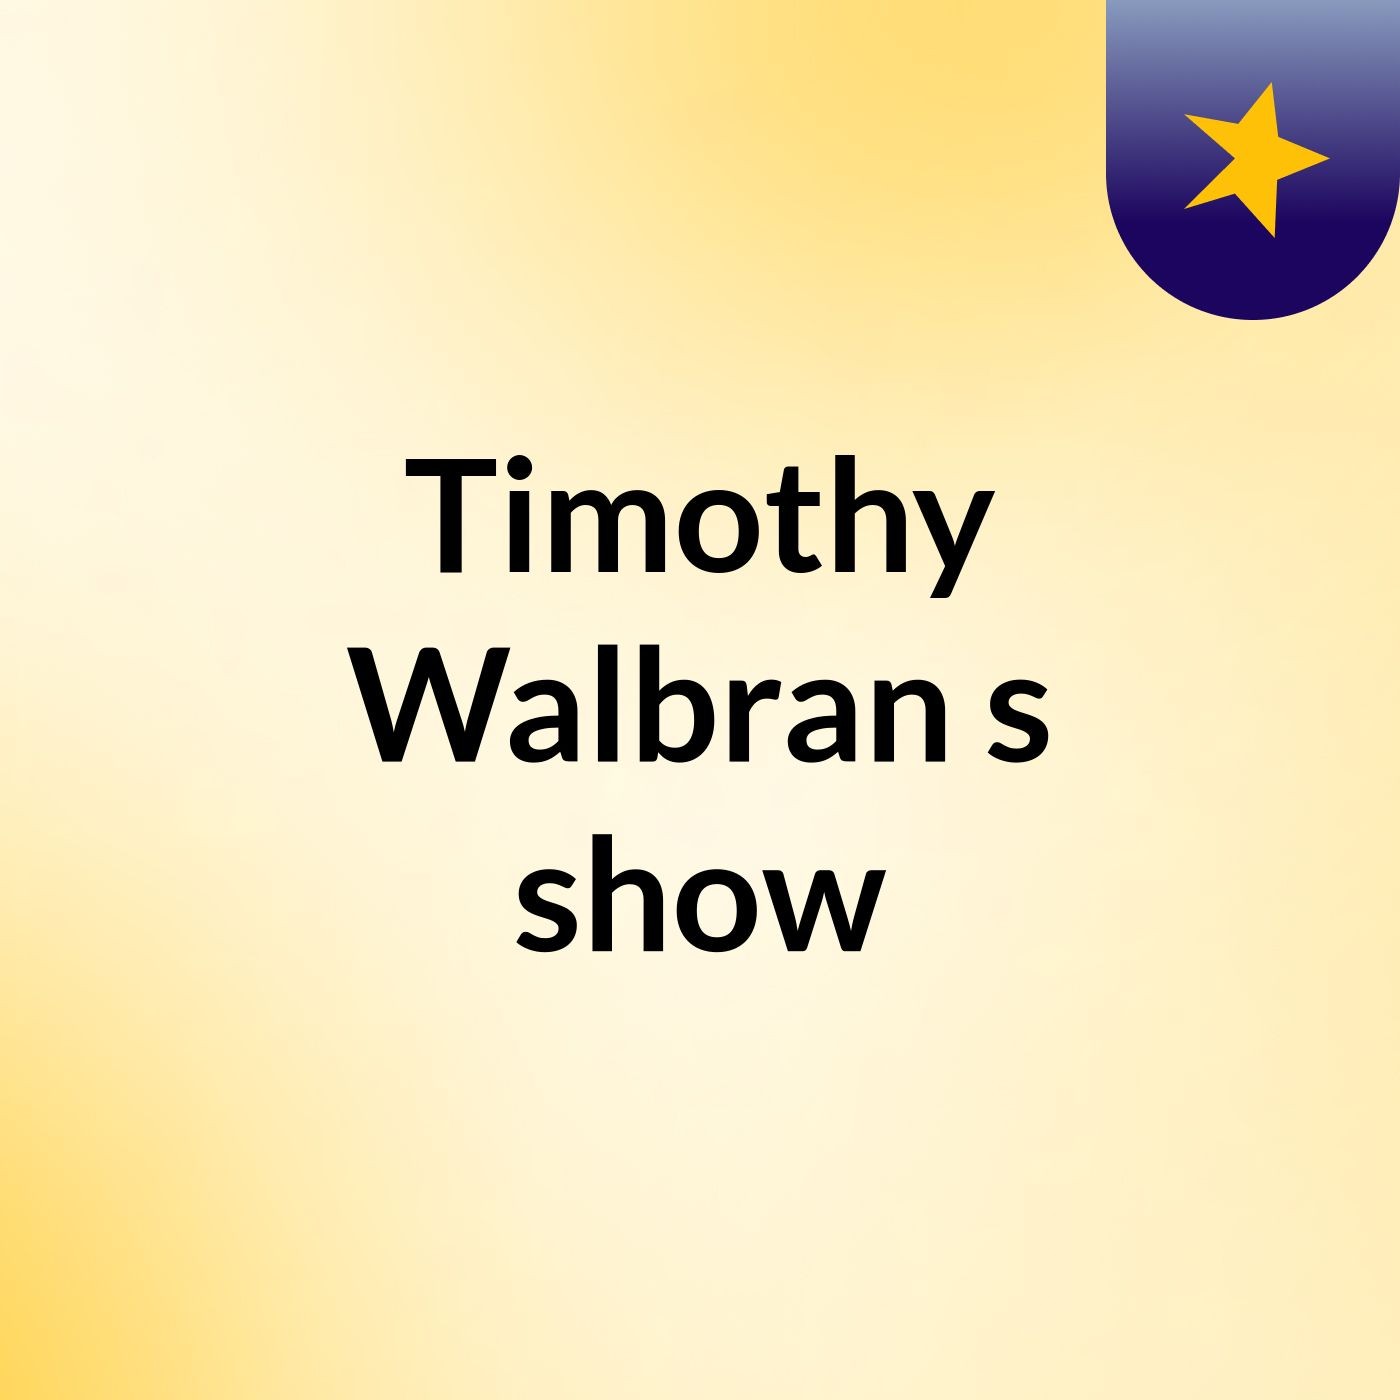 Timothy Walbran's show